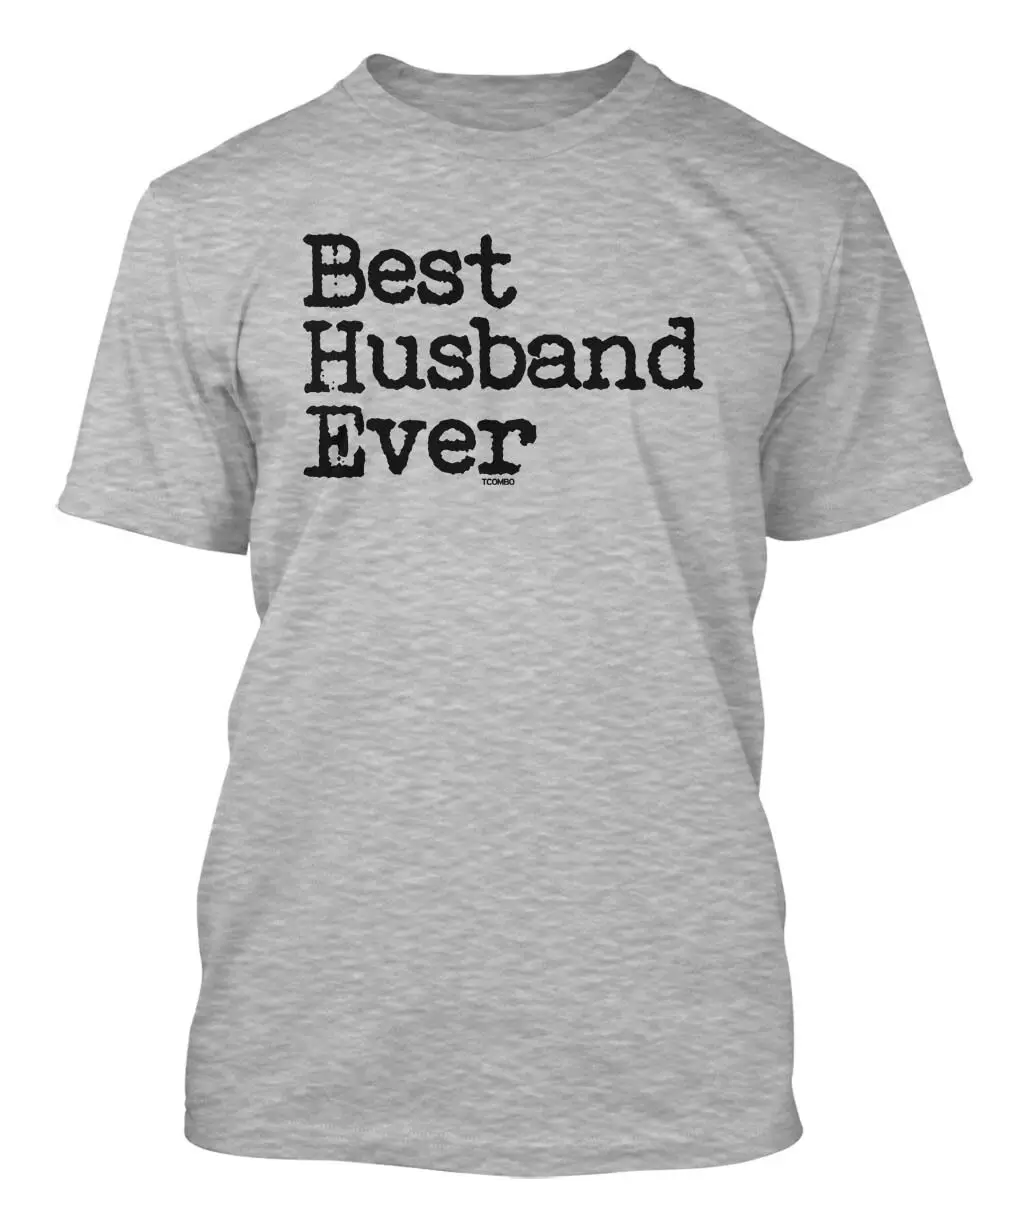 Мужская футболка с надписью «Best Man Ever-Dad's Day Love»